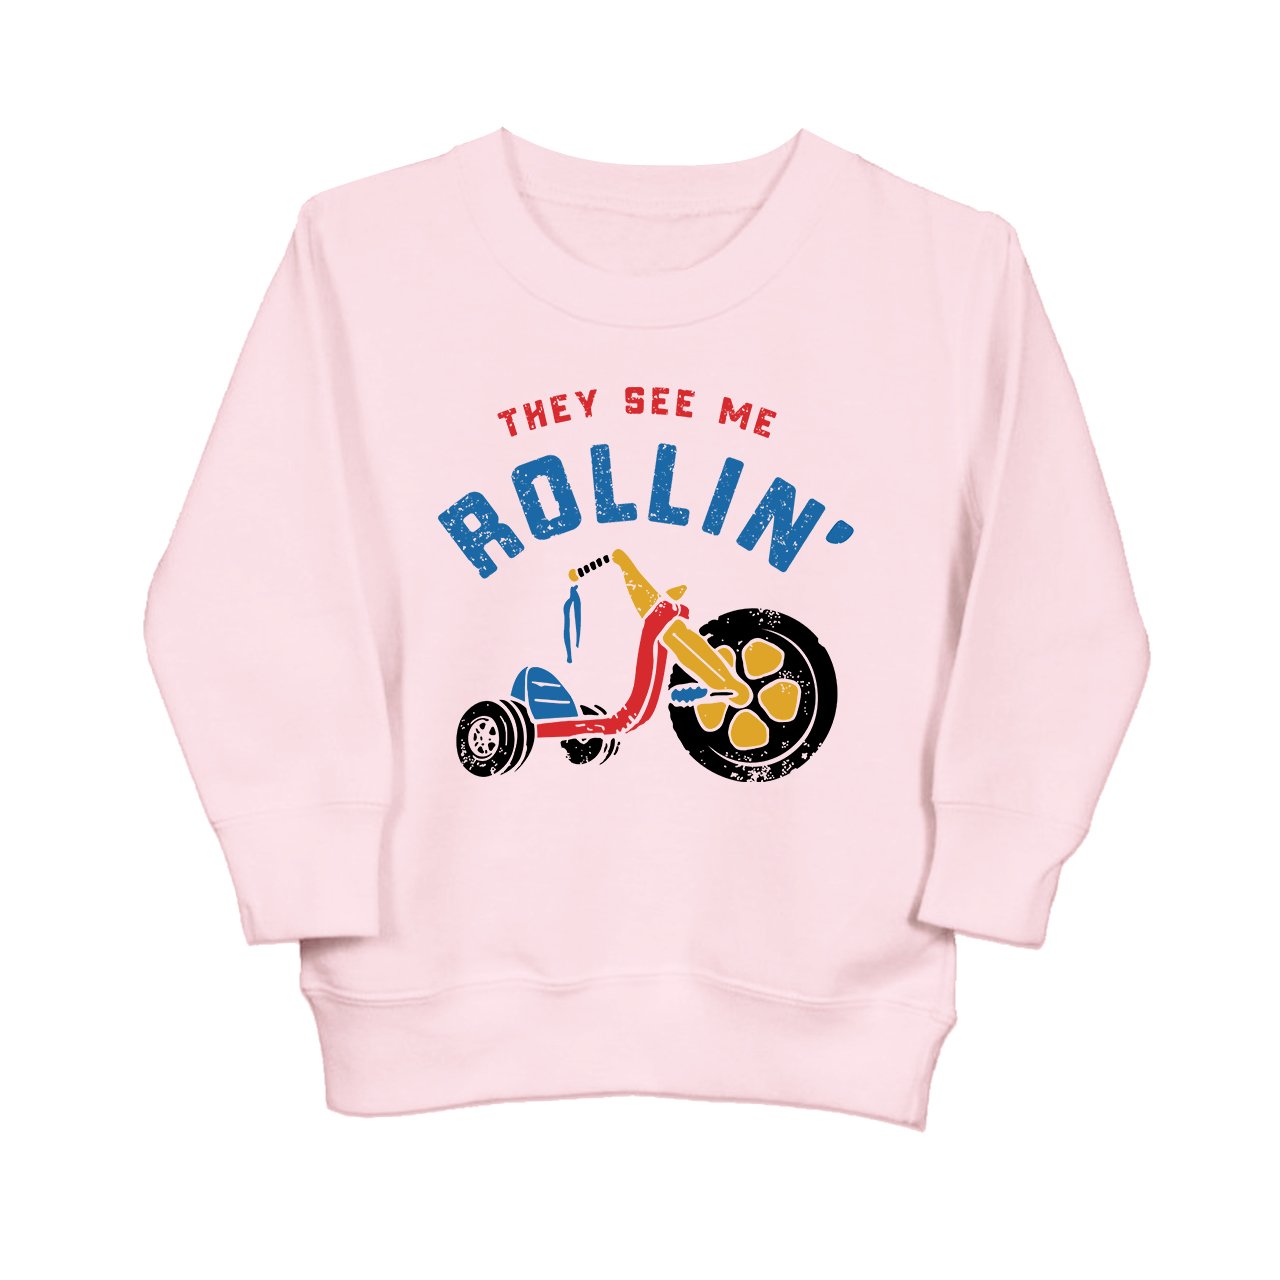 They See Me Rollin' Bike Kids Sweatshirt